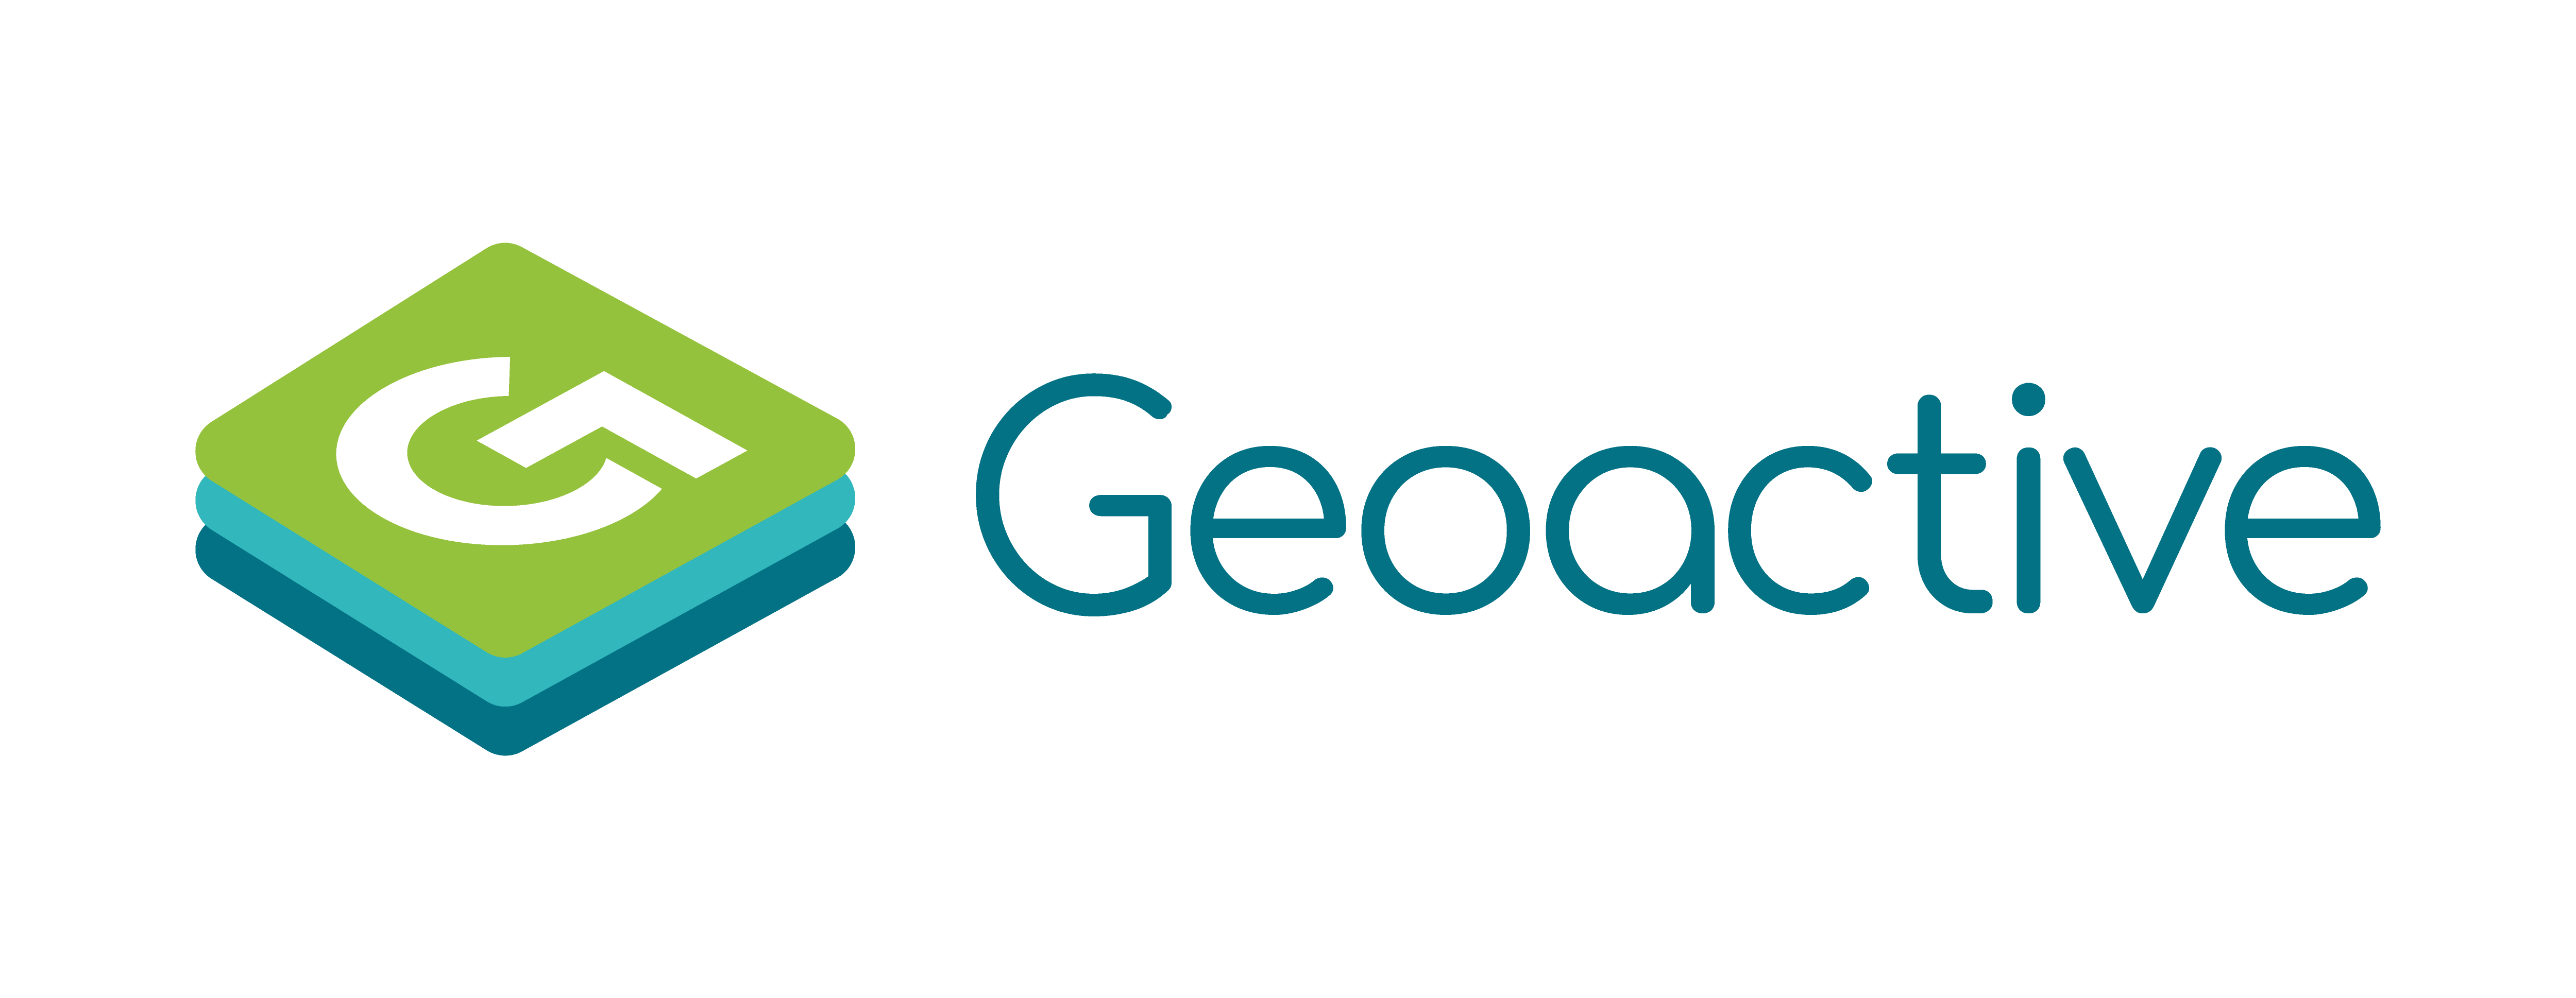 Geoactive_master_logo_RGB